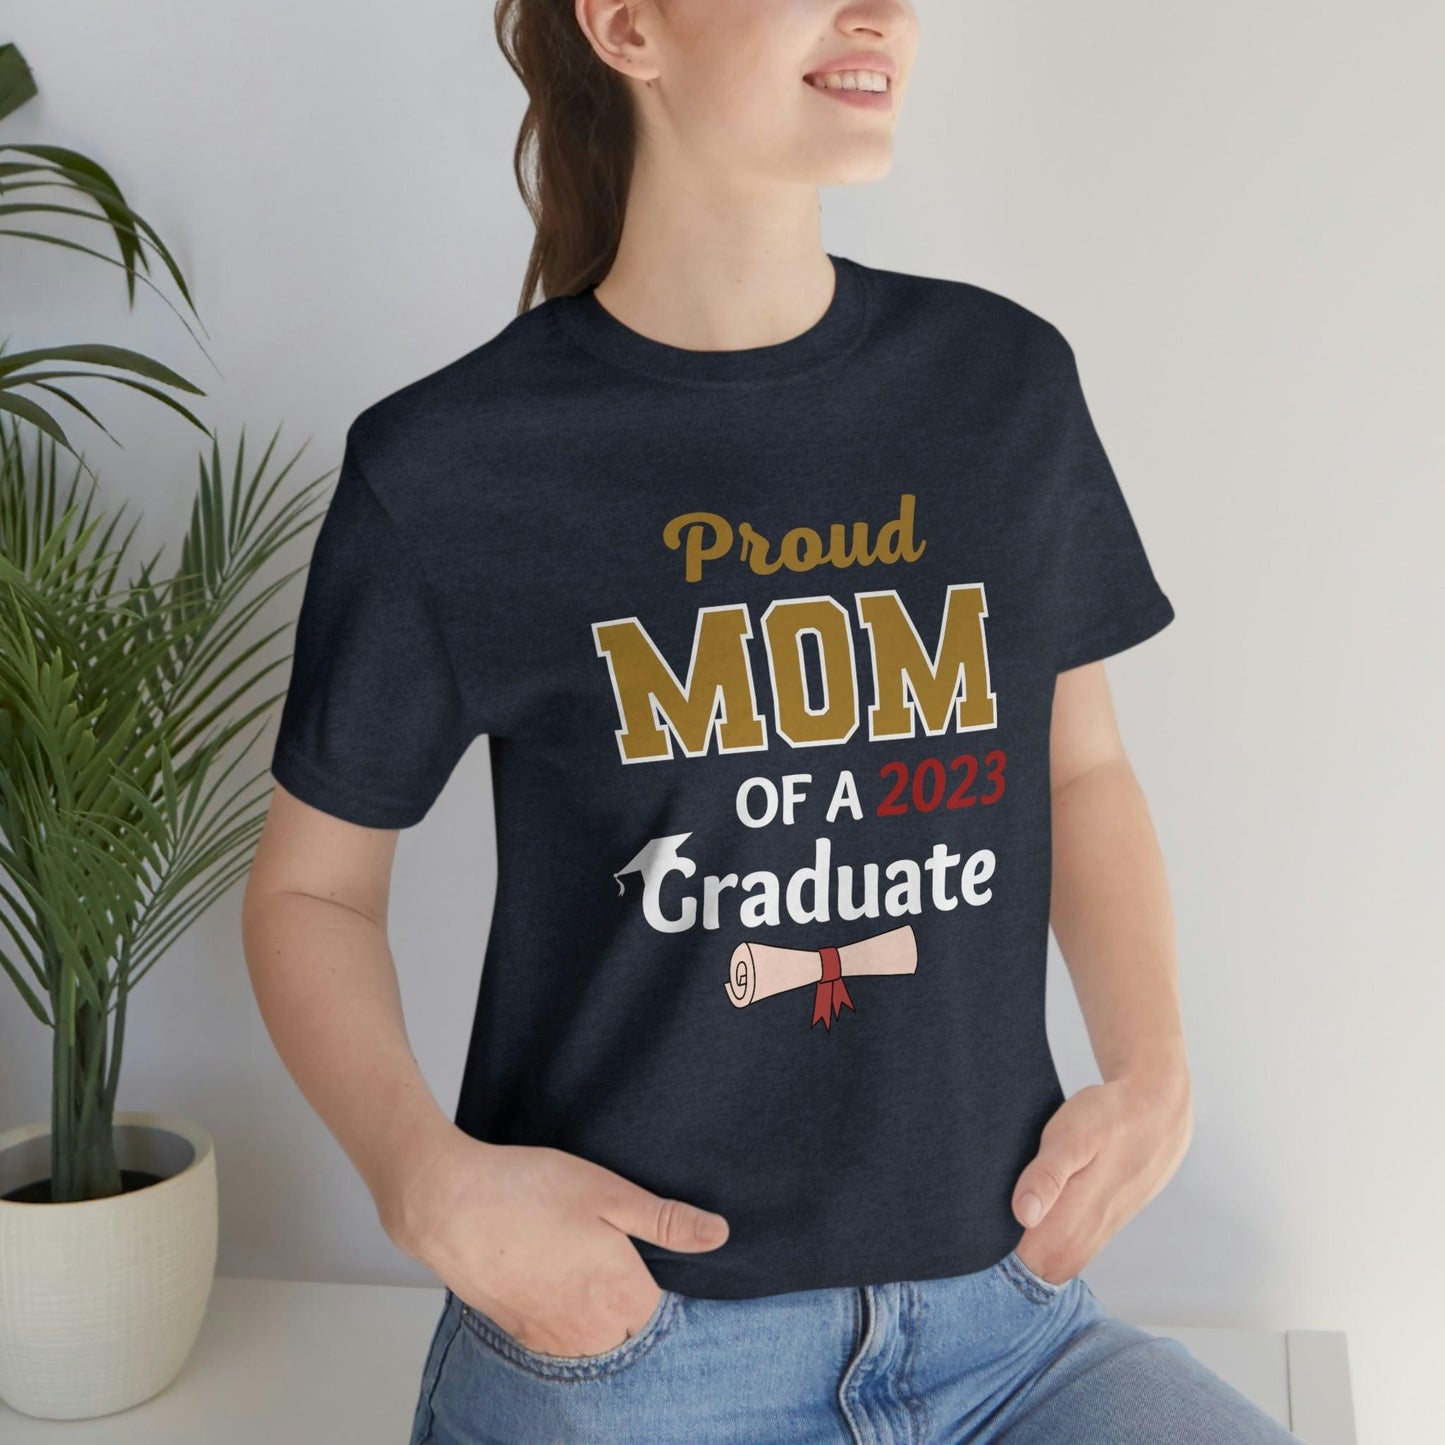 Proud Mom Of a Graduate shirt - Graduation shirt - Graduation gift